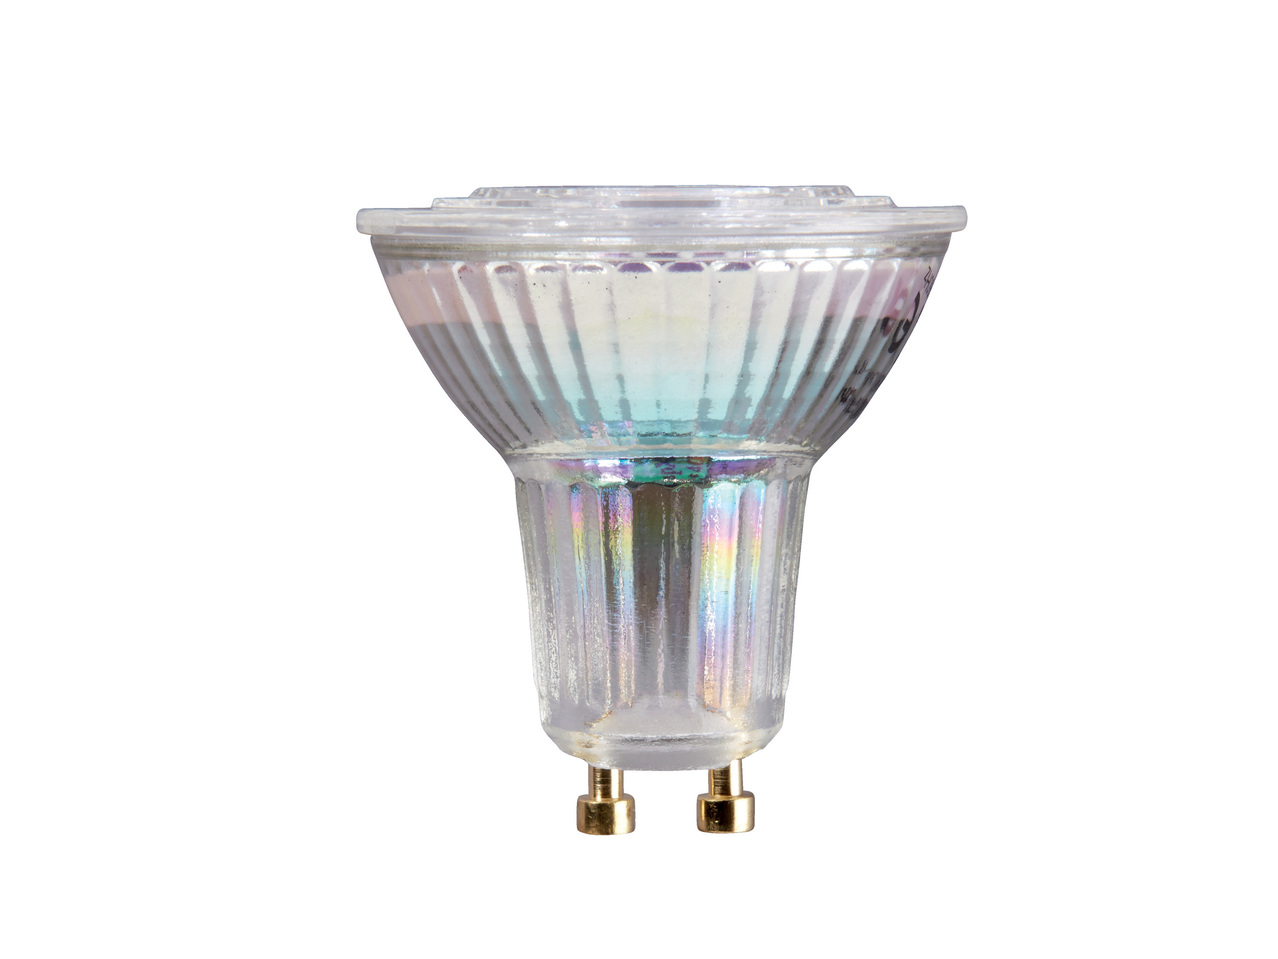 LED Dimmable Light Bulb